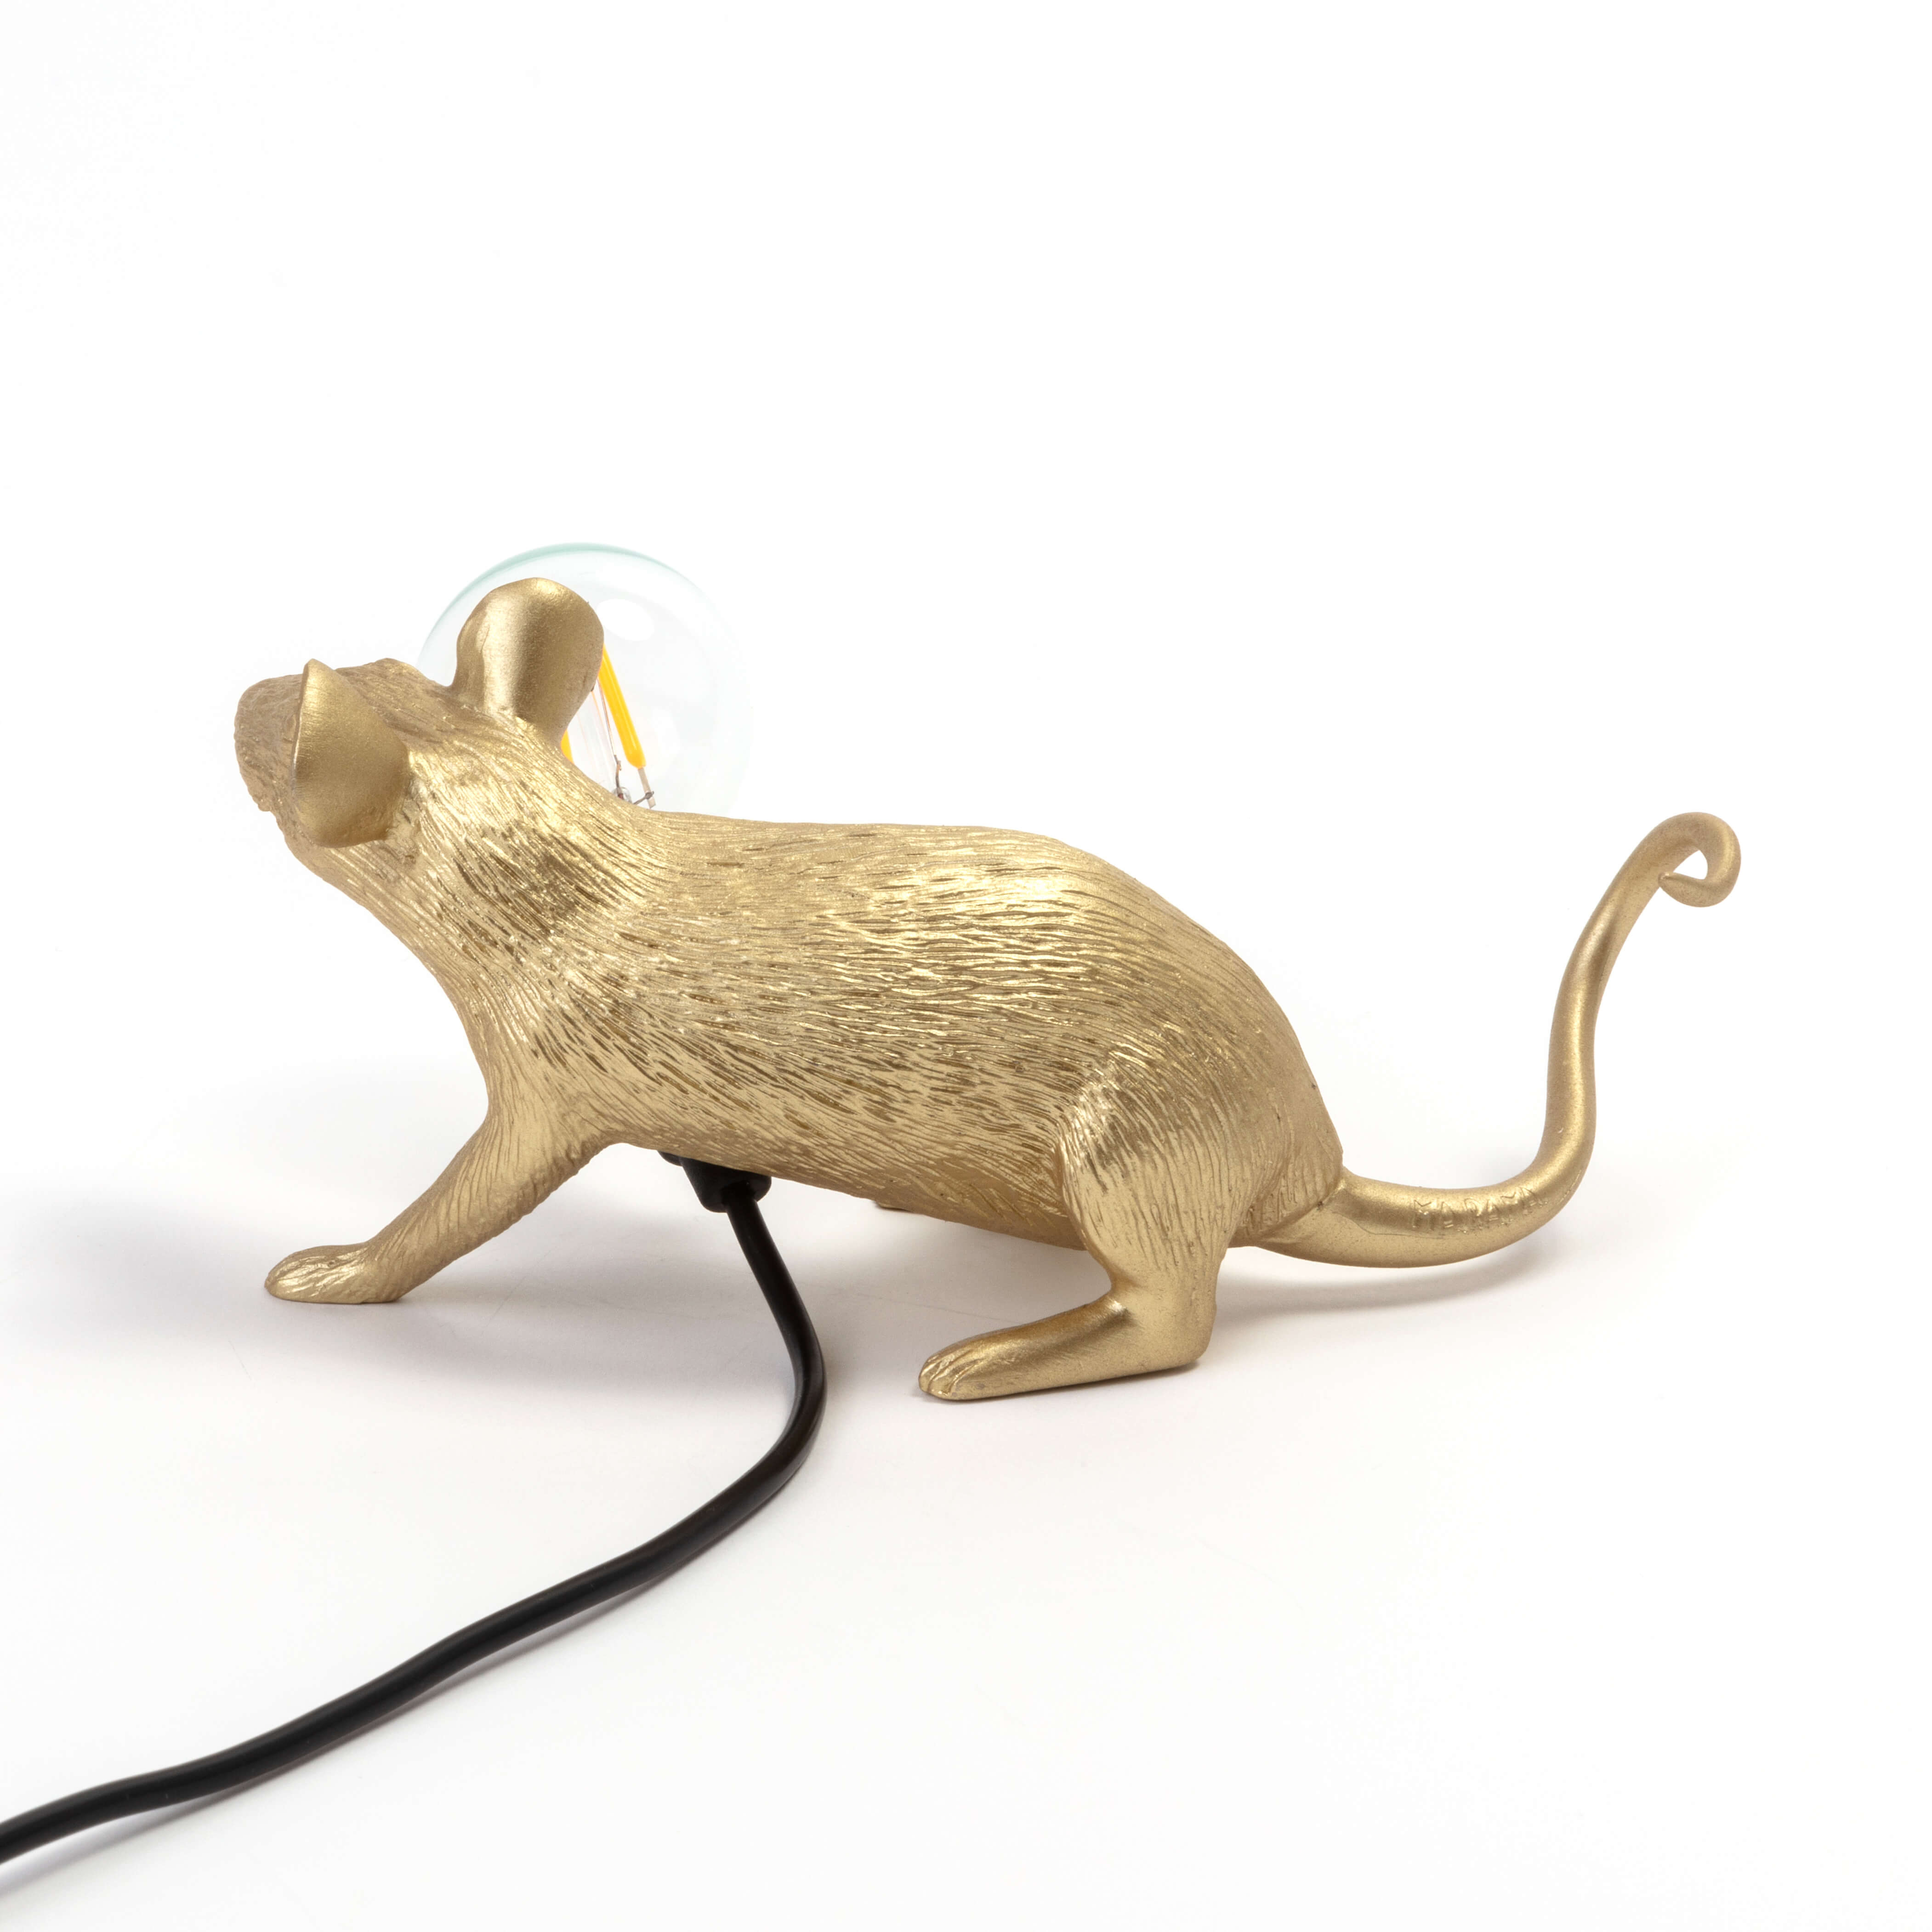 Seletti Mouse Lamp Resin lamp - lying mouse